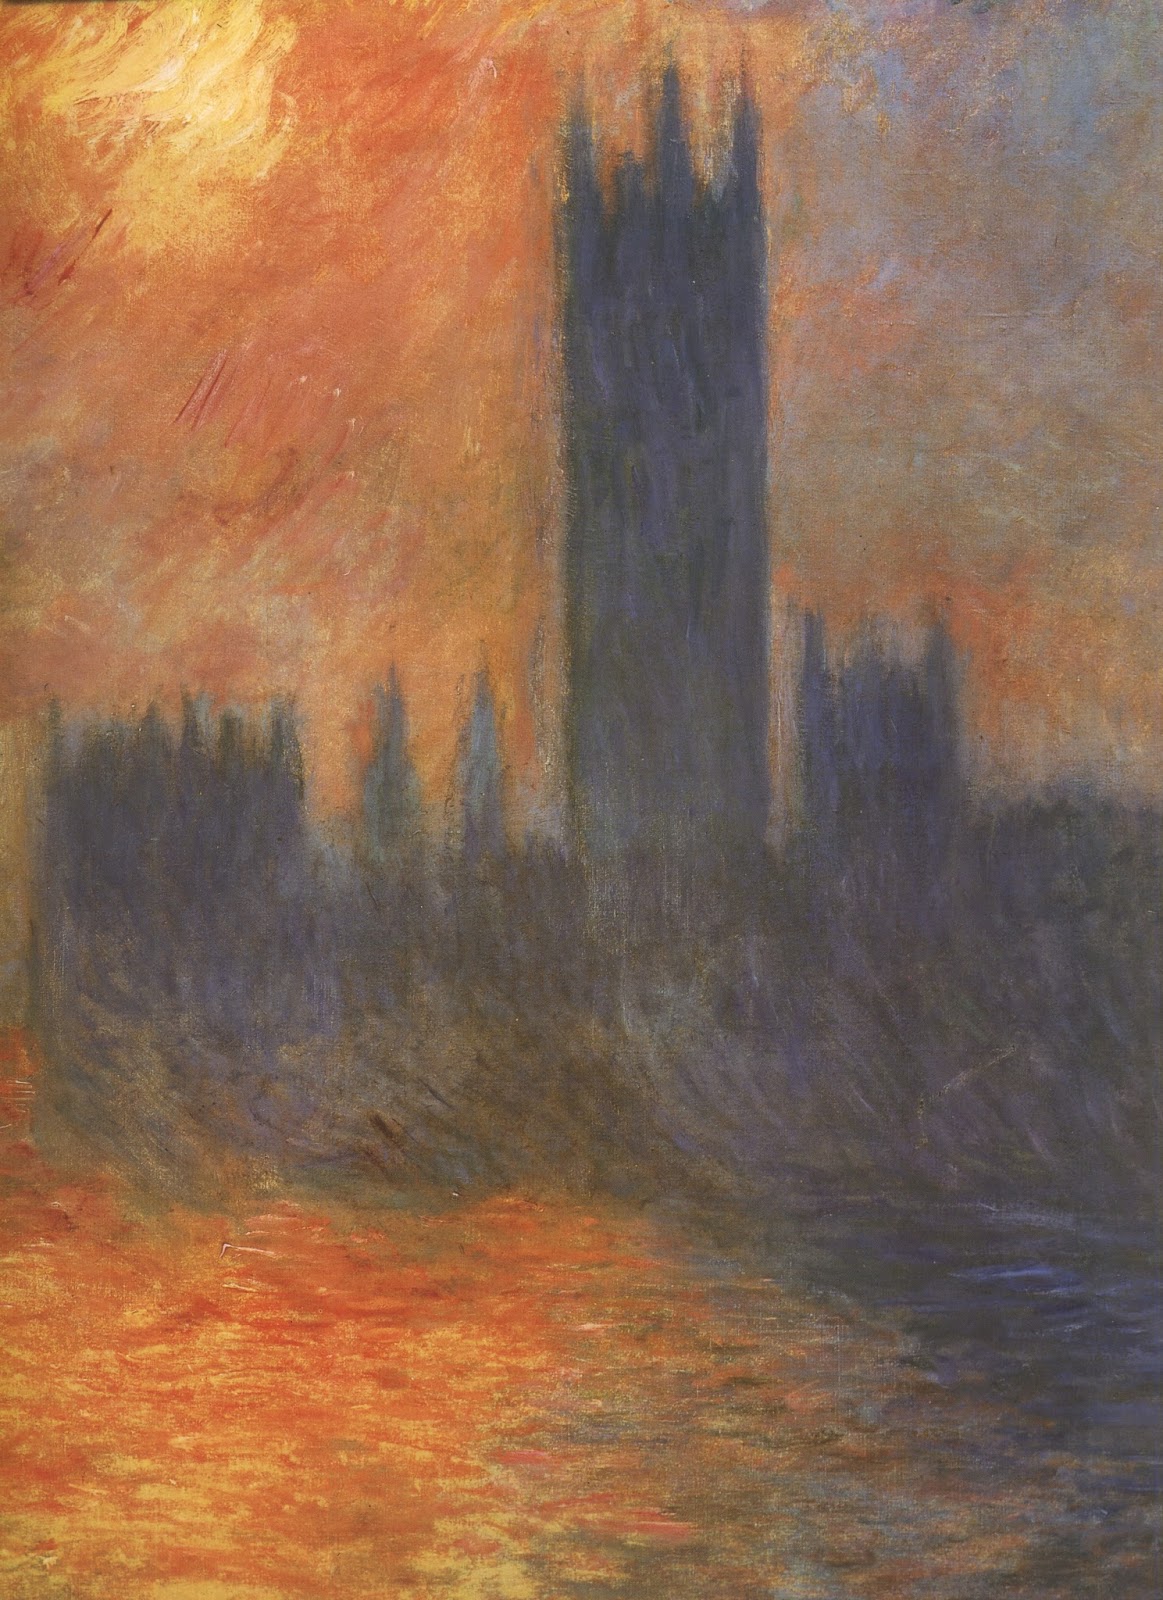 Claude+Monet-1840-1926 (310).jpg